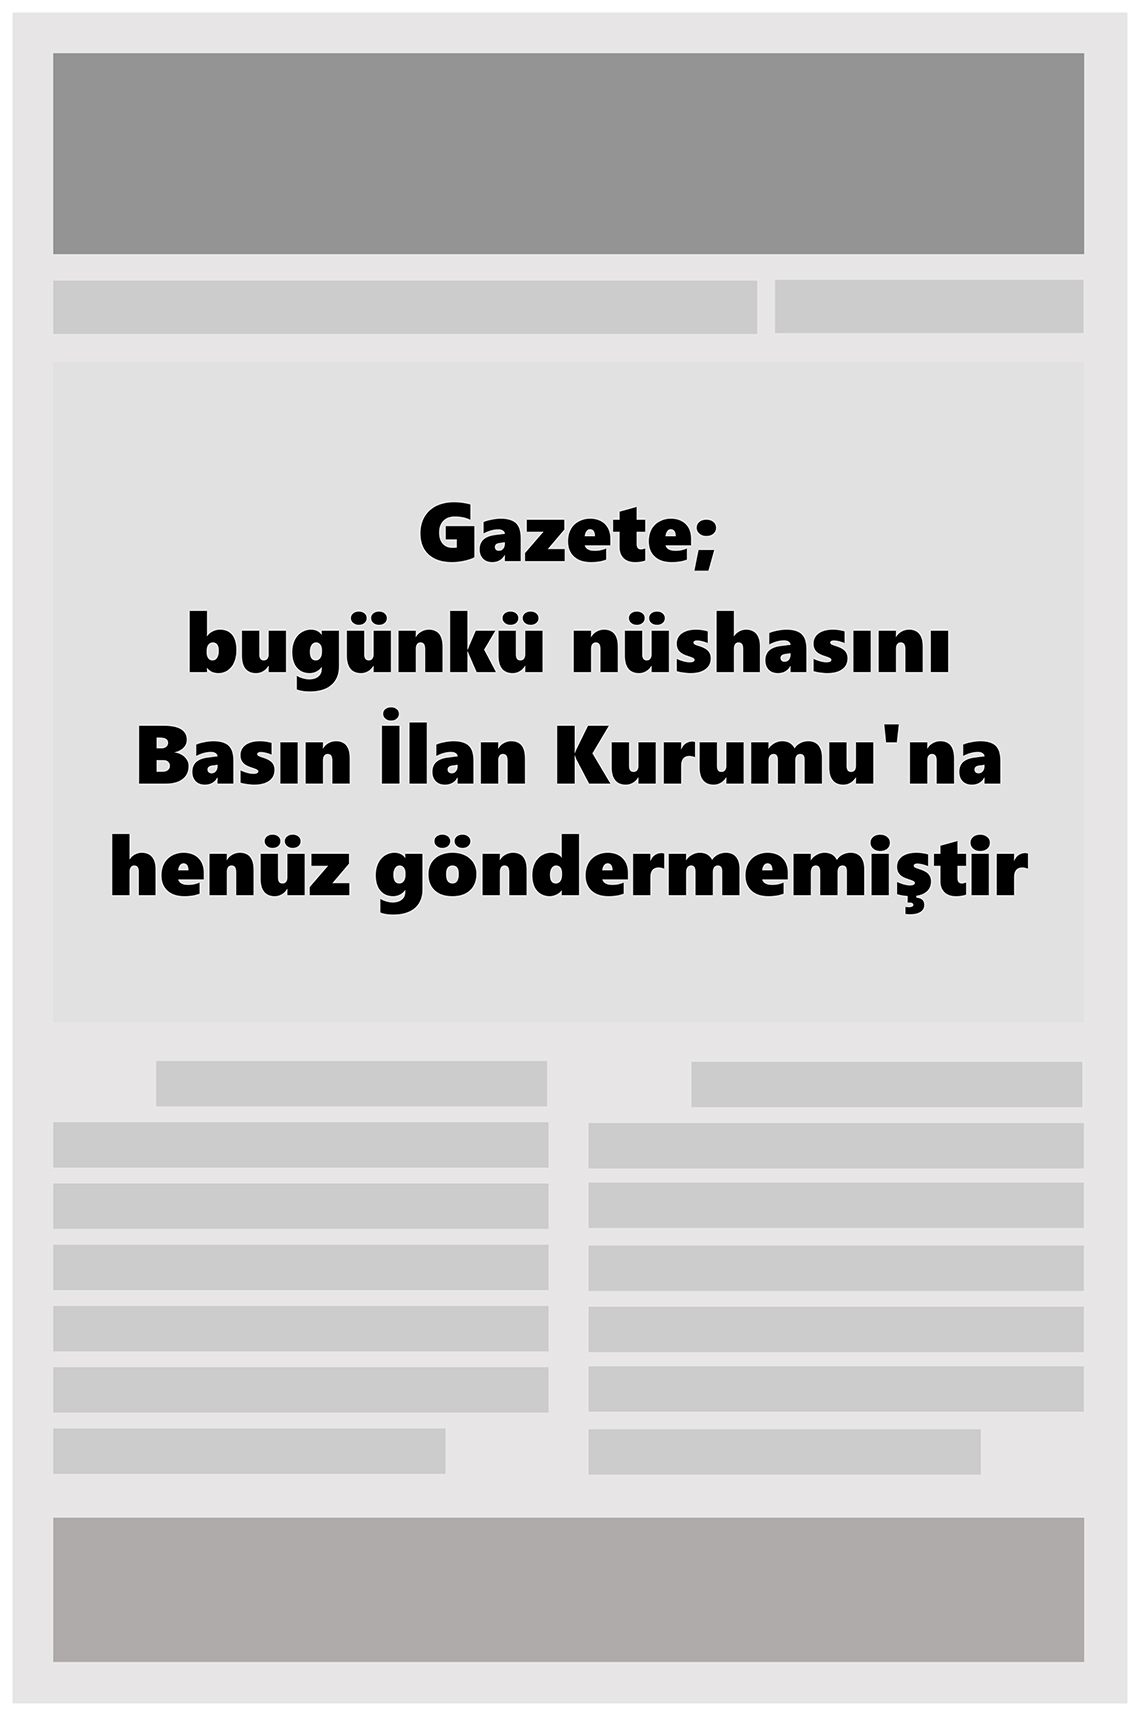 07 Ağustos 2022 Balıkesir Politika Gazete Manşeti